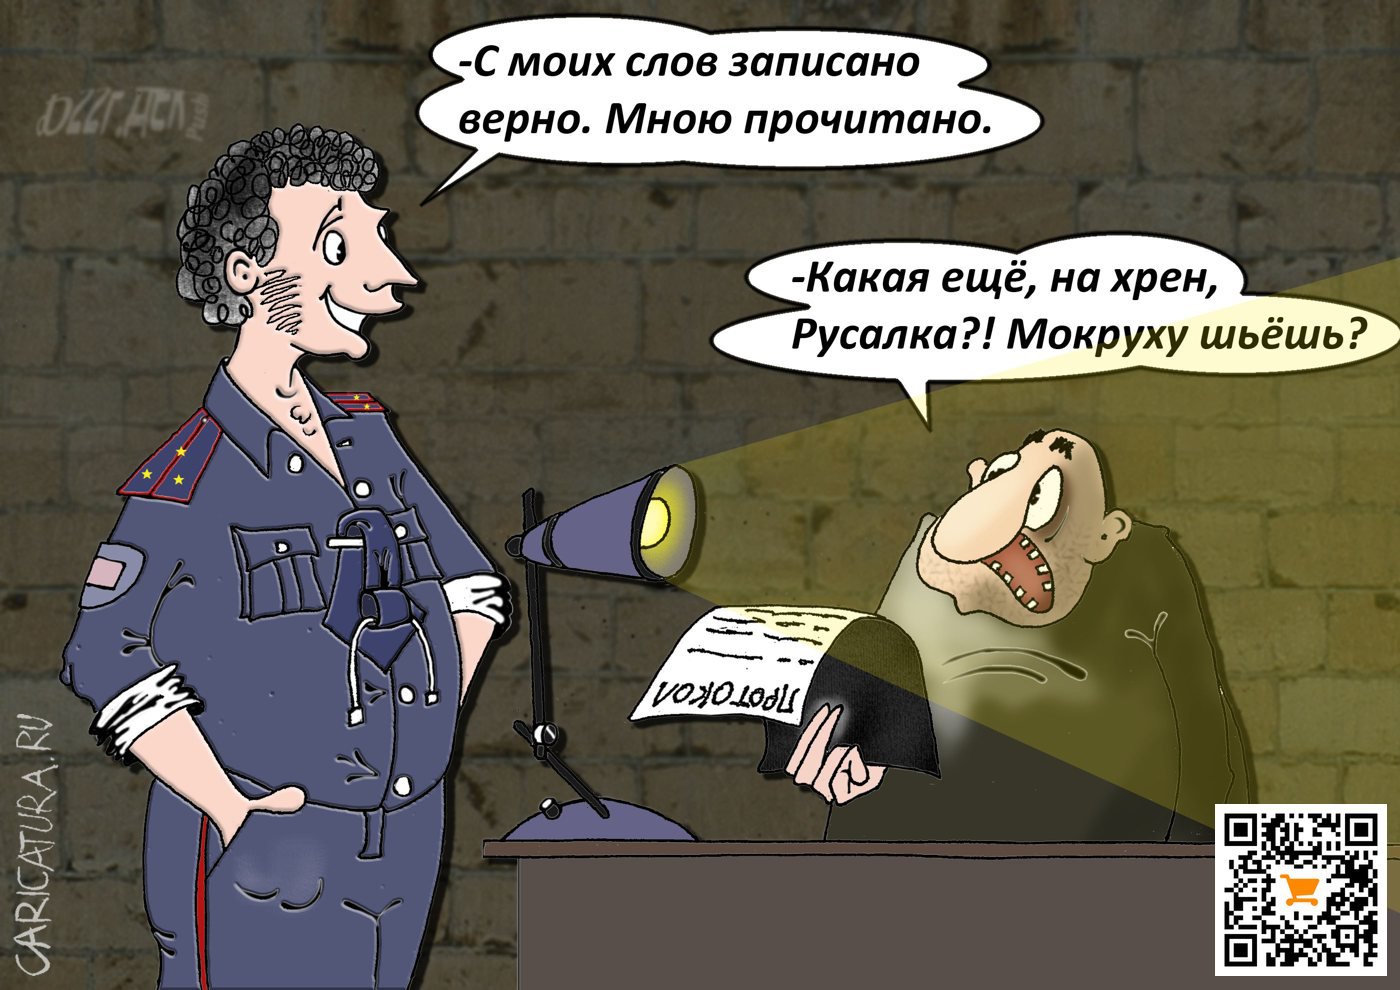 Карикатура "Про сказки Пушкина", Борис Демин